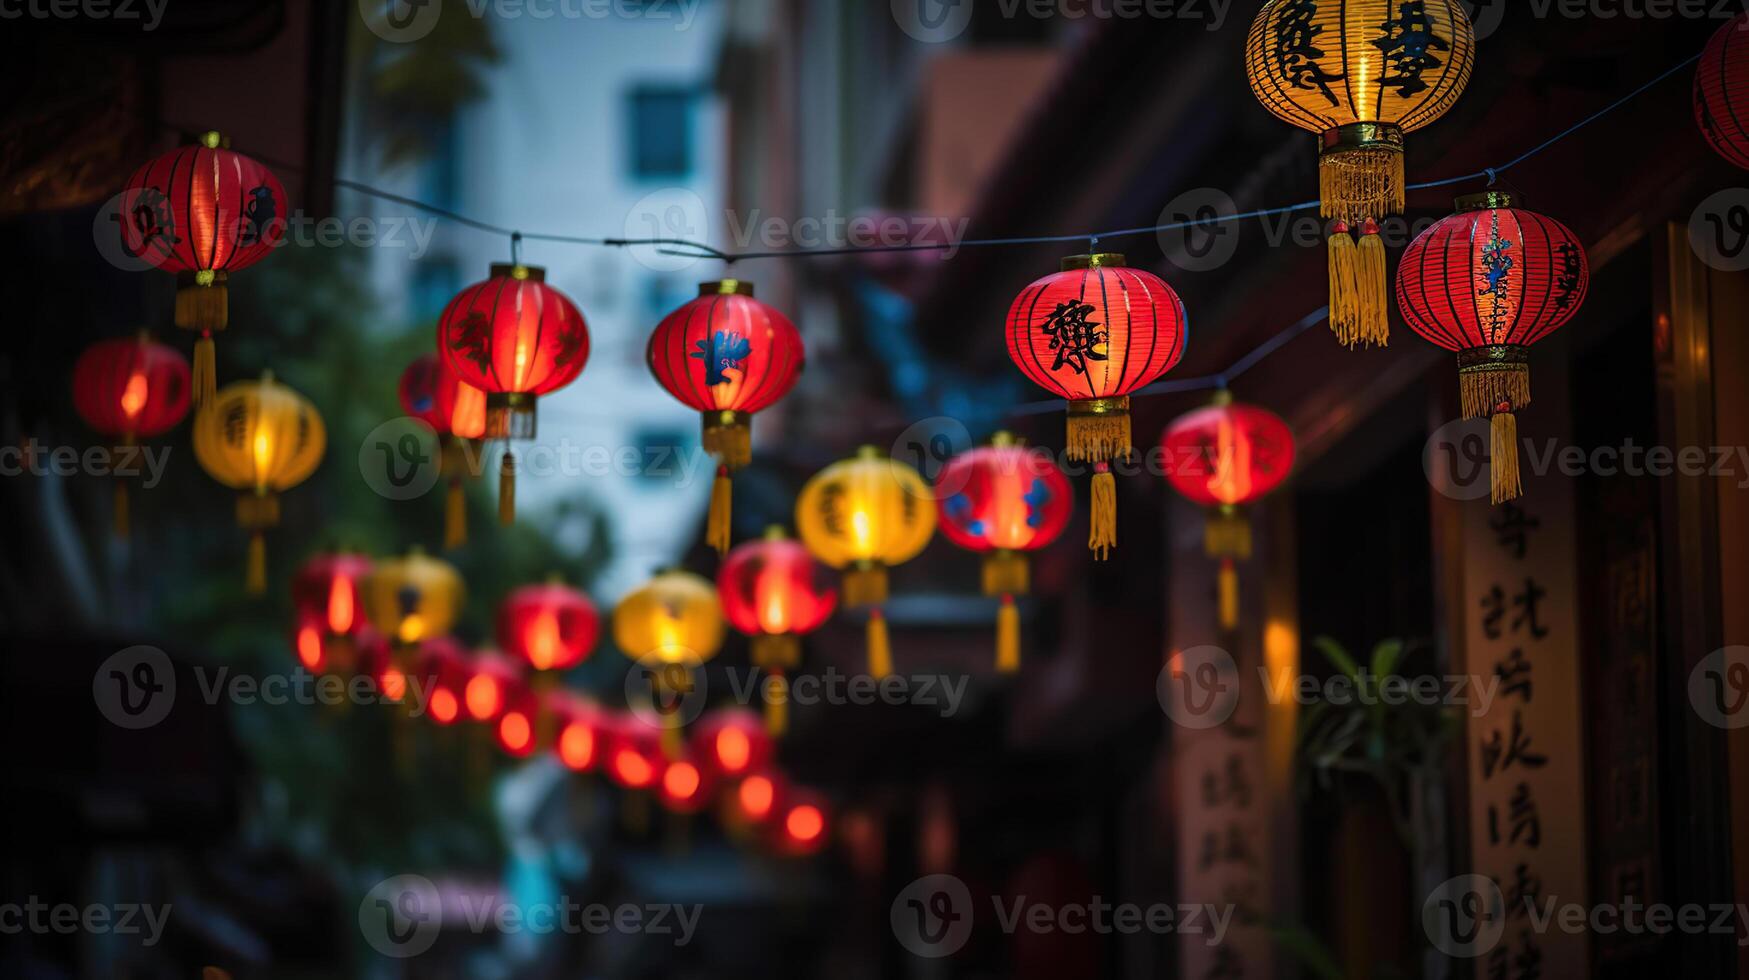 Chinese new year lanterns in china town, photo